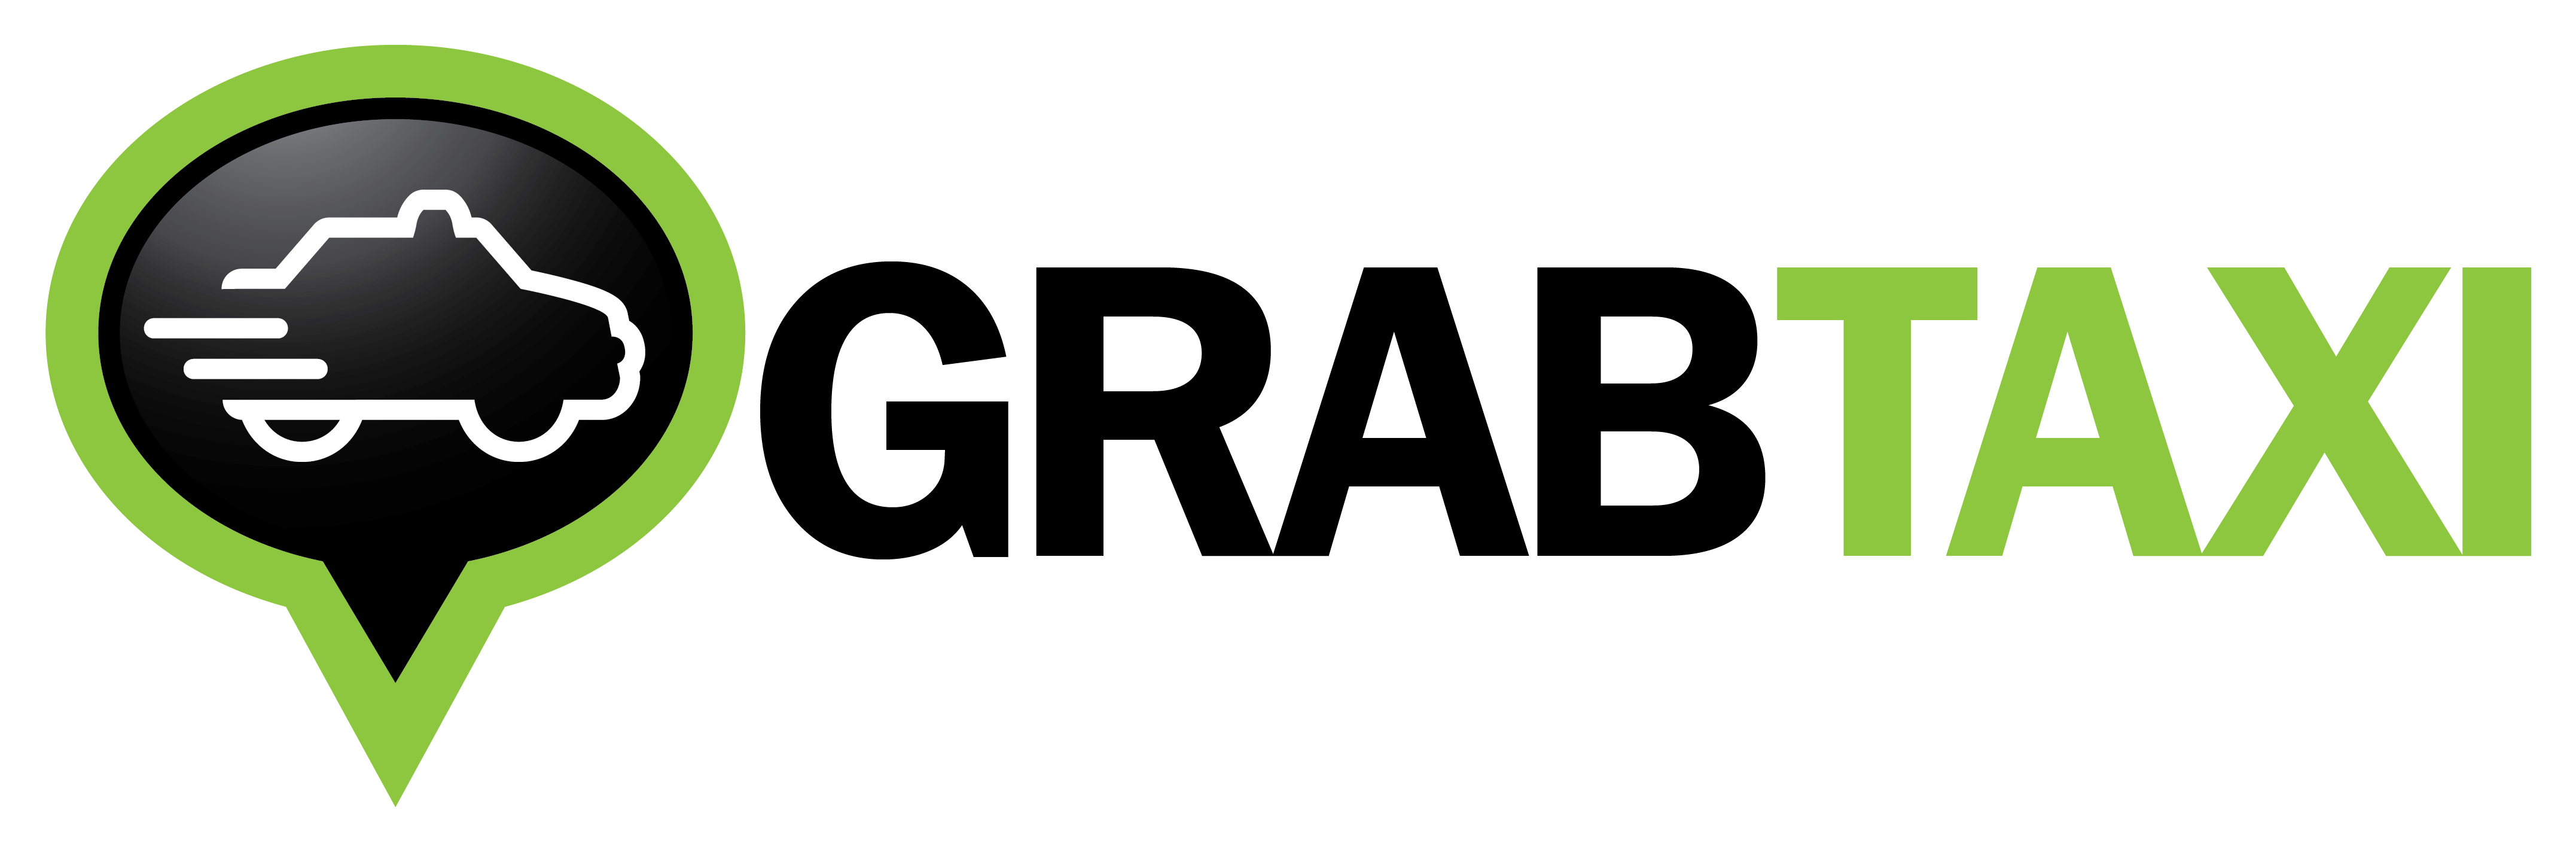 Grab Bike Logo - Is Bitcoin Integration Key? Go-Jek and GrabBike Rivarly in Jakarta ...